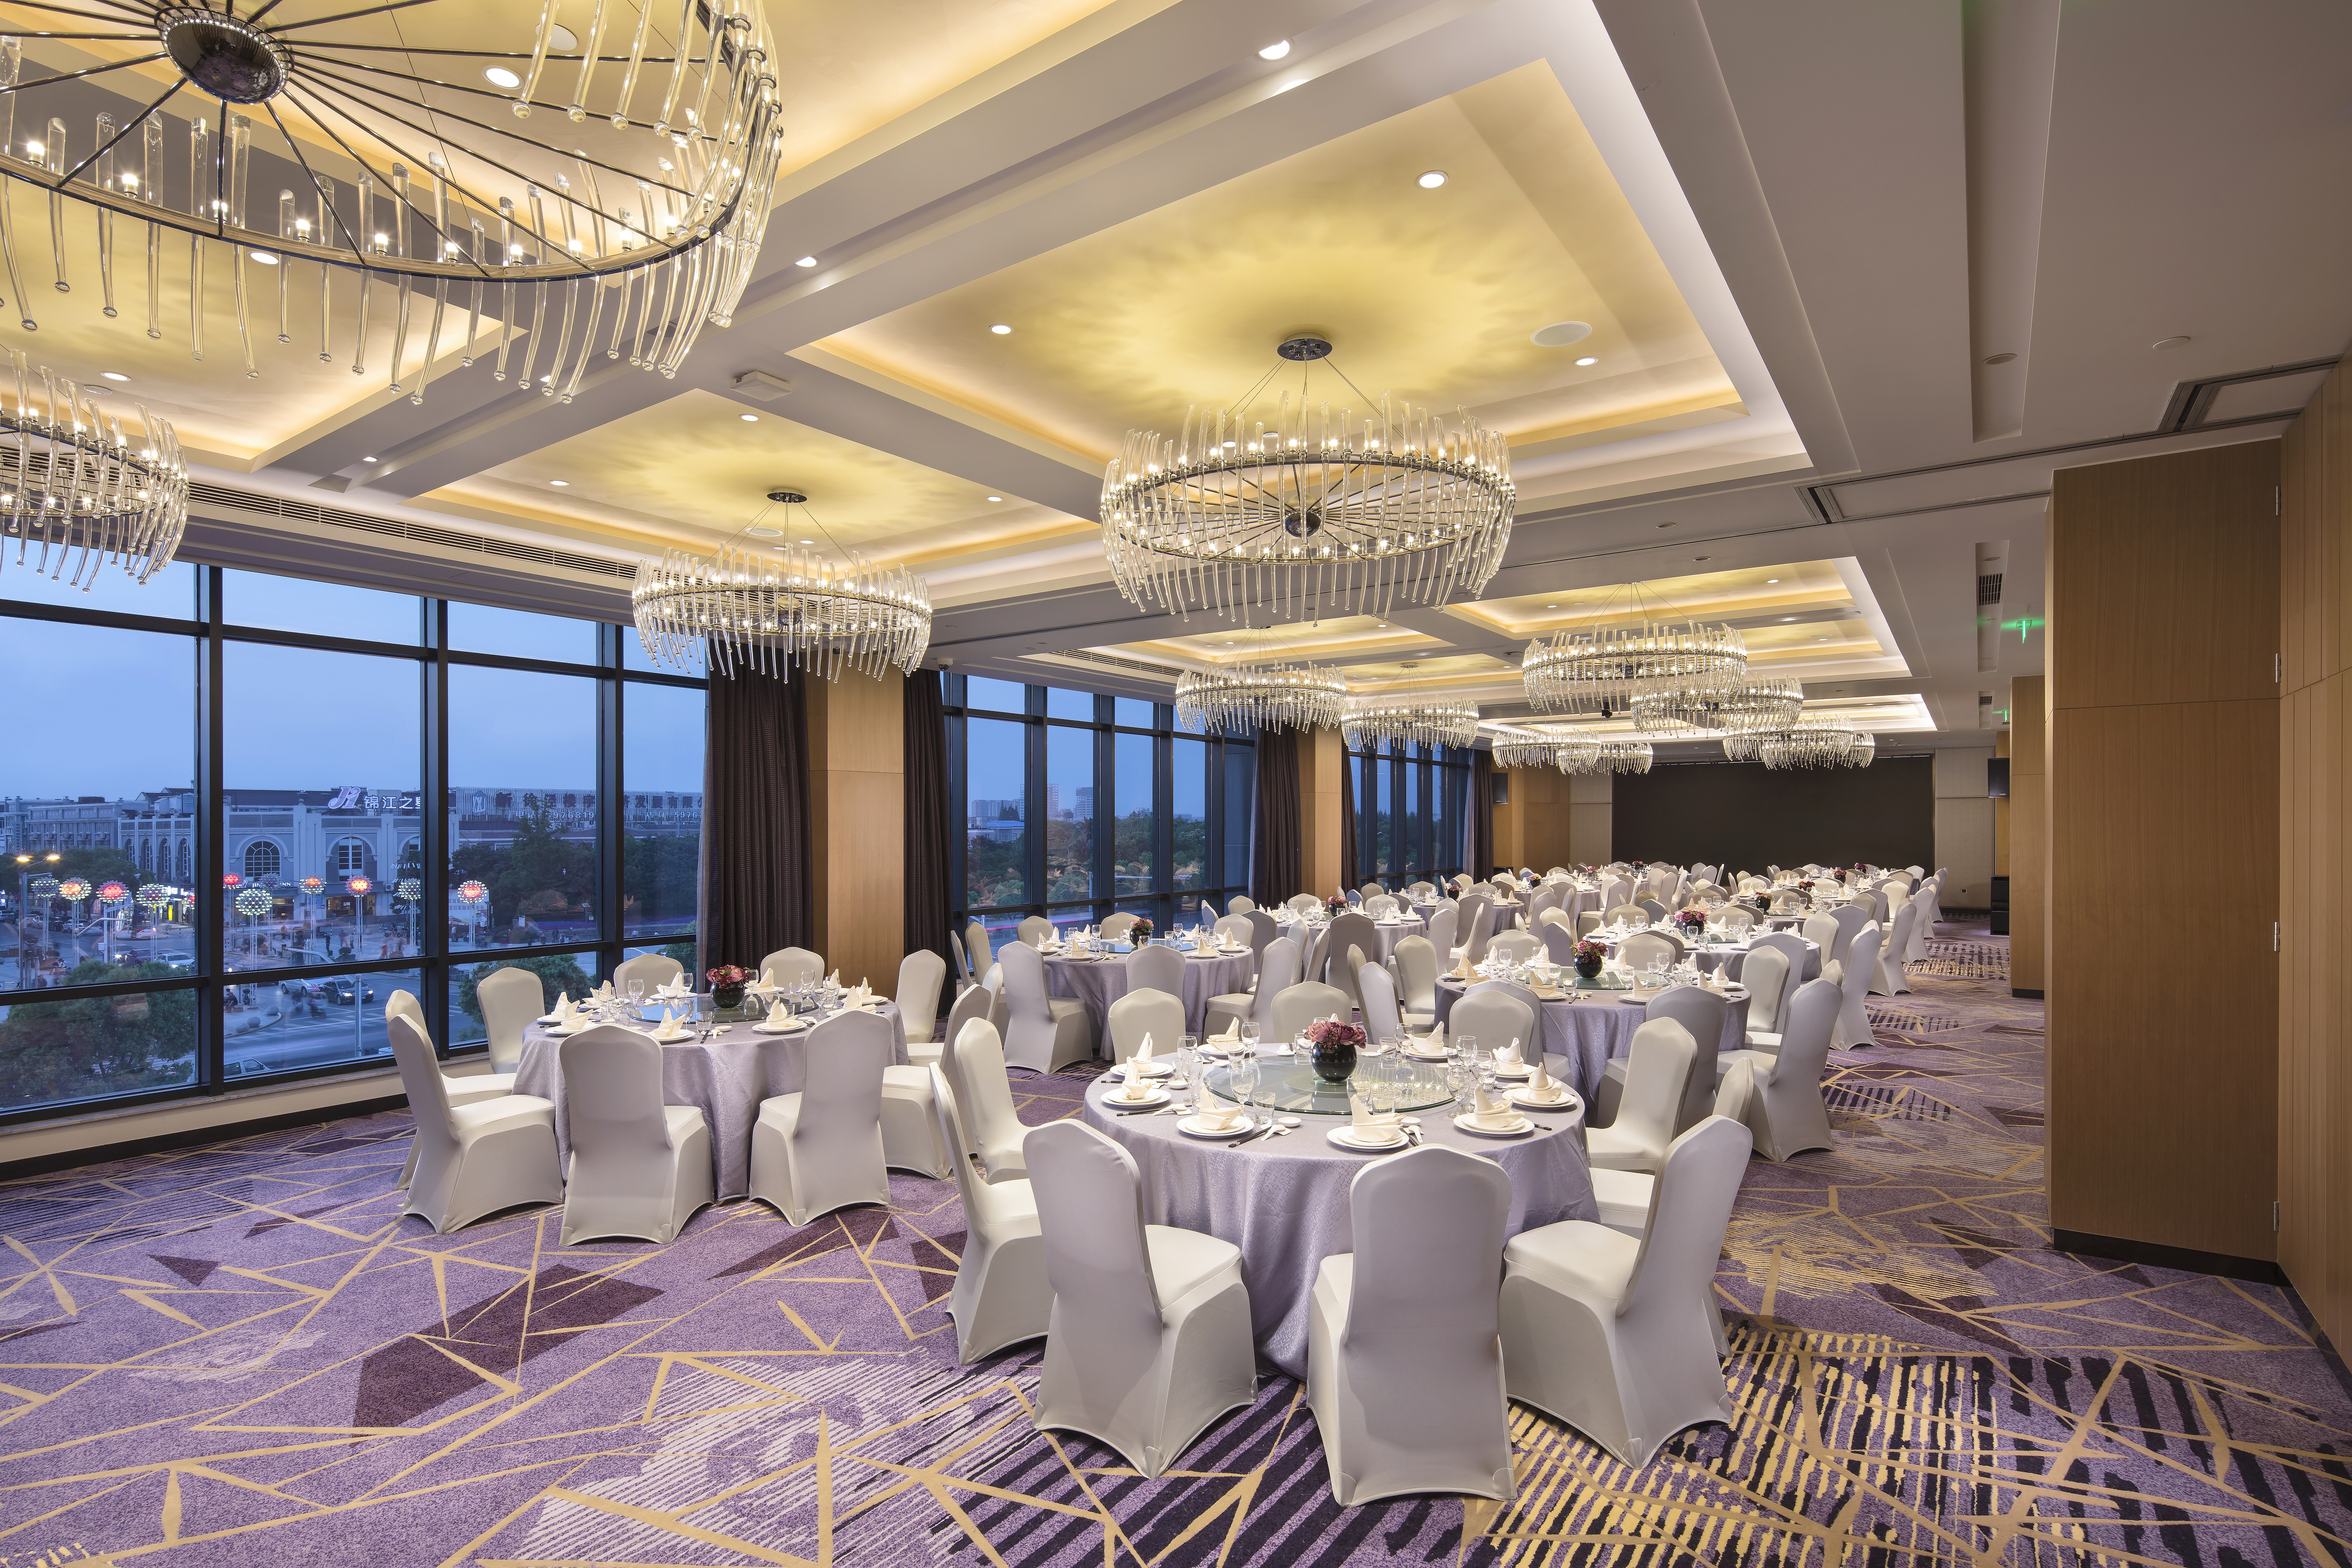 Hilton Garden Inn Shanghai Hongqiao Hotel, China - Glorious Hall